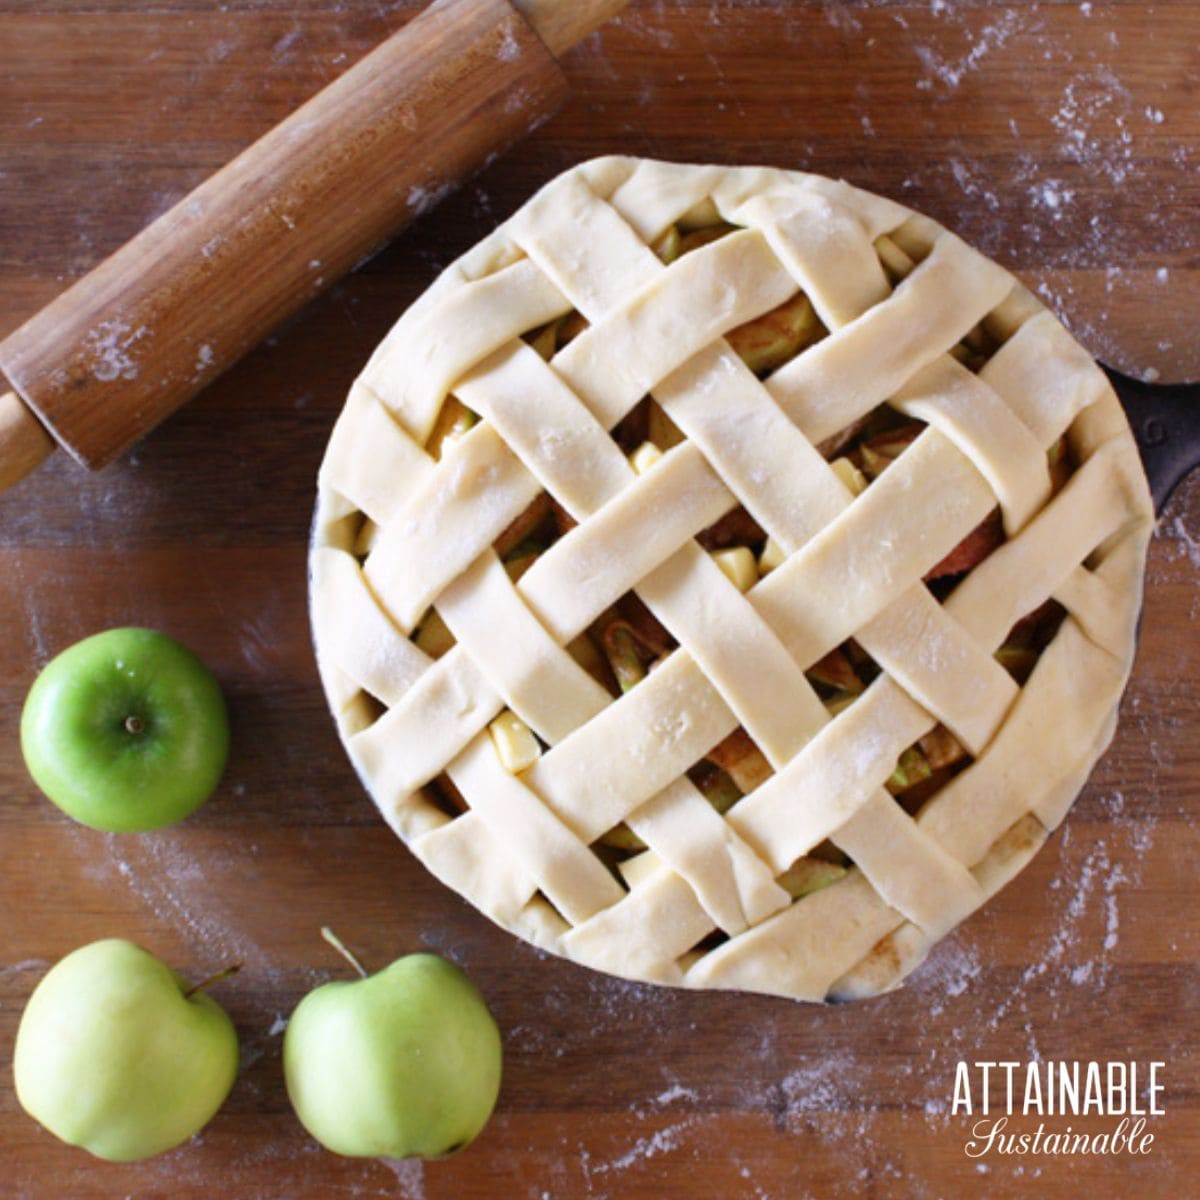 lattice top apple pie before baking.